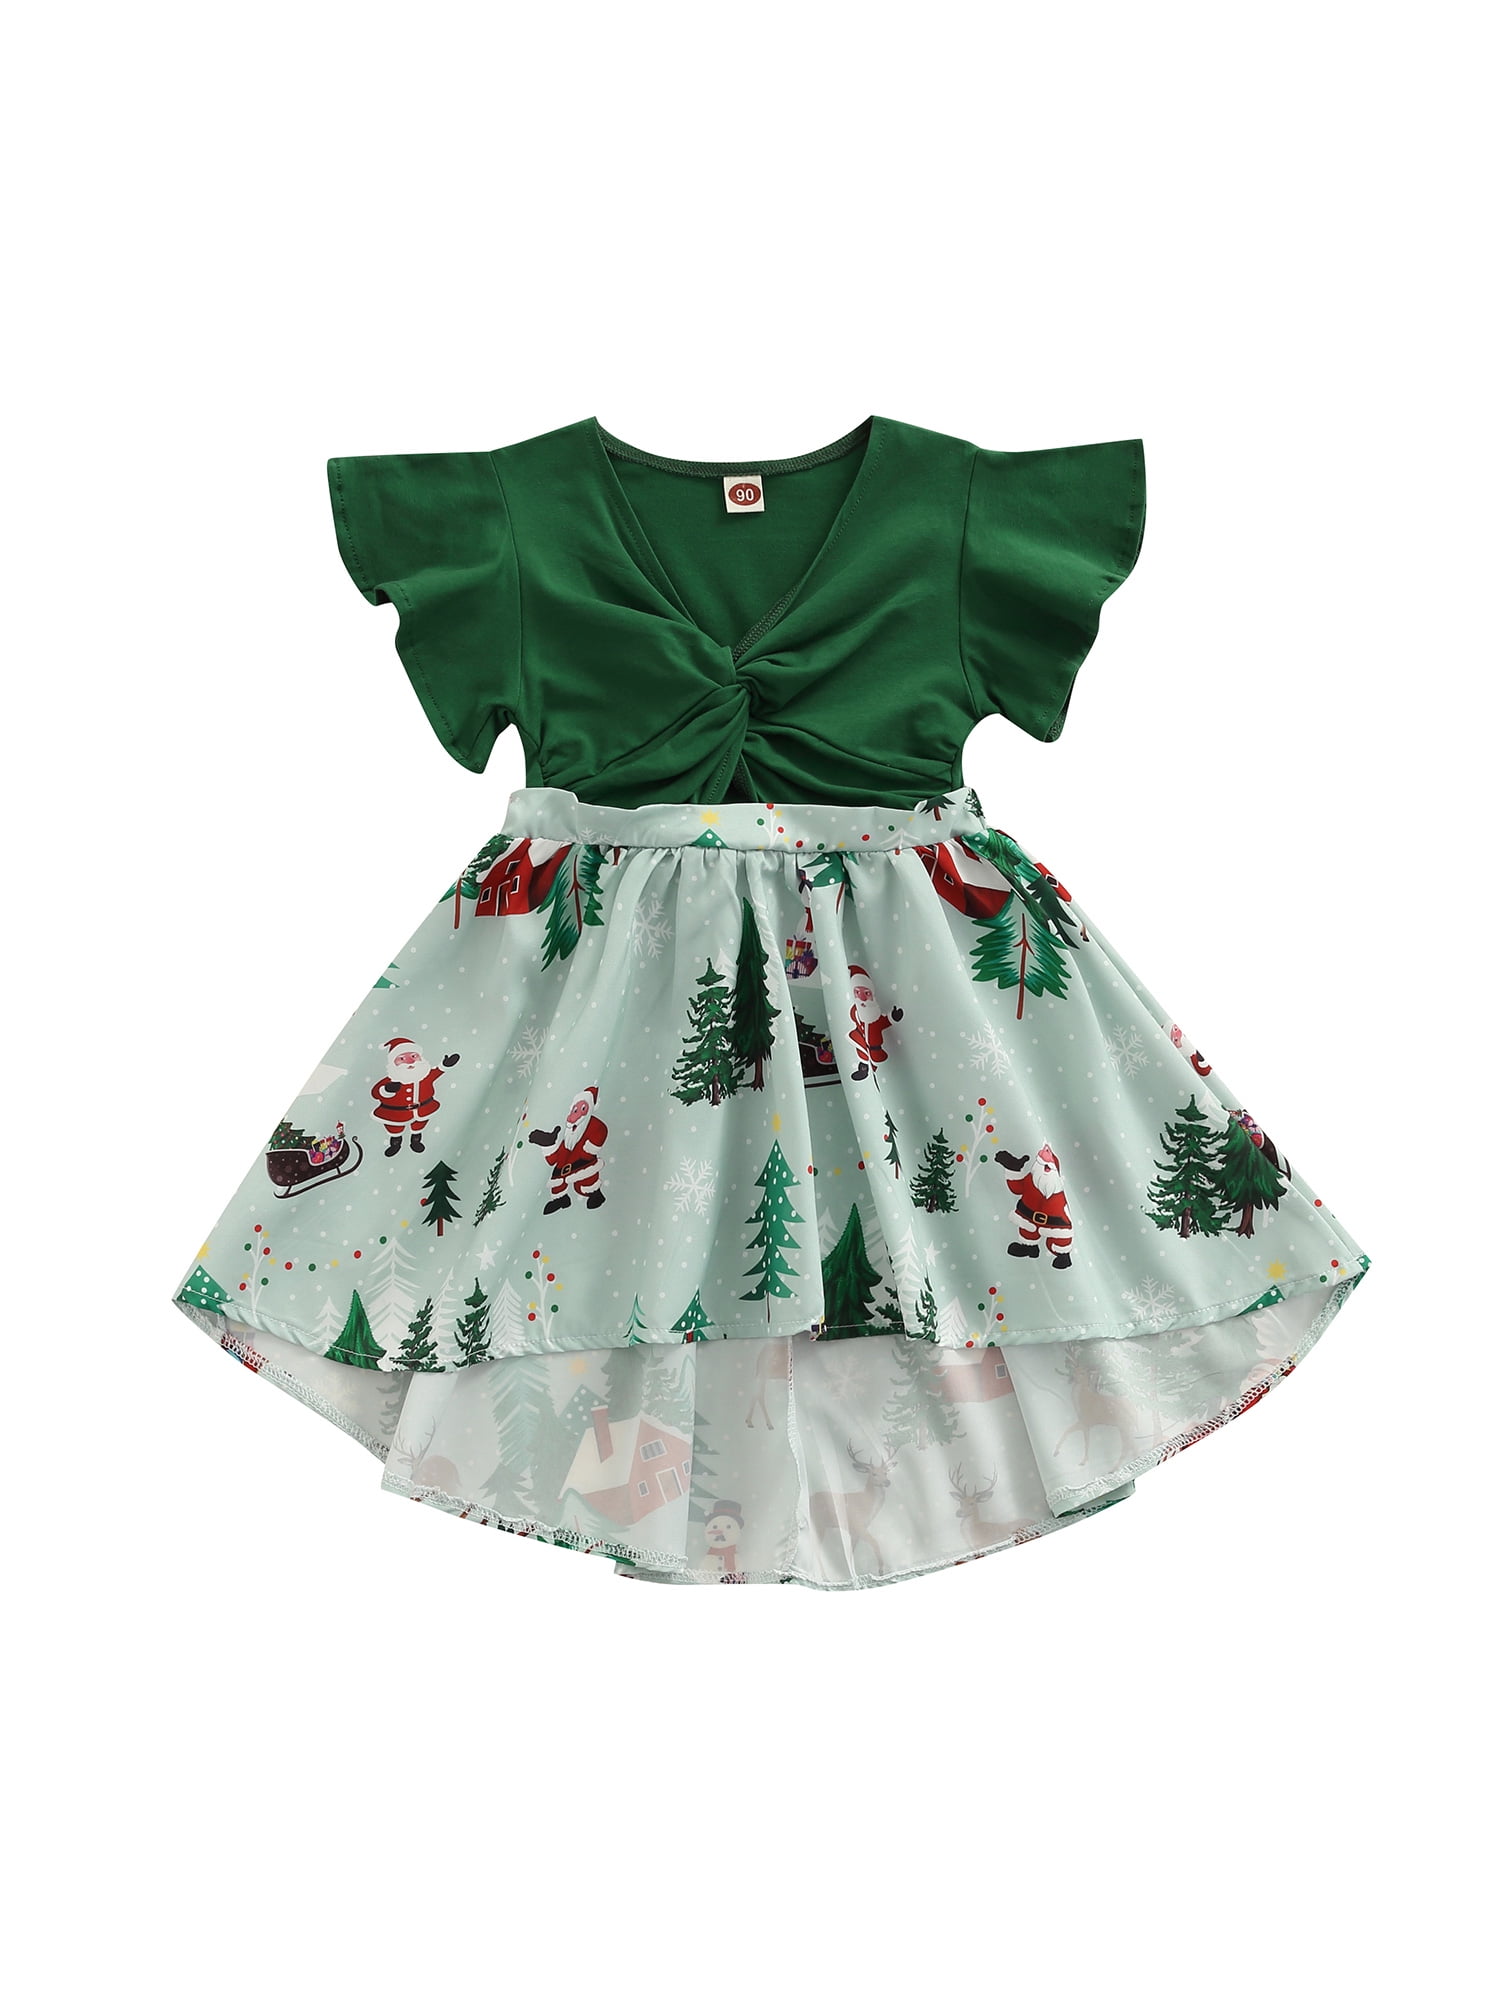 Andannby Little Sister Matching Christmas Dress Big Girl Green Santa Print Ruffle Playwear Holiday Xmas Dresses